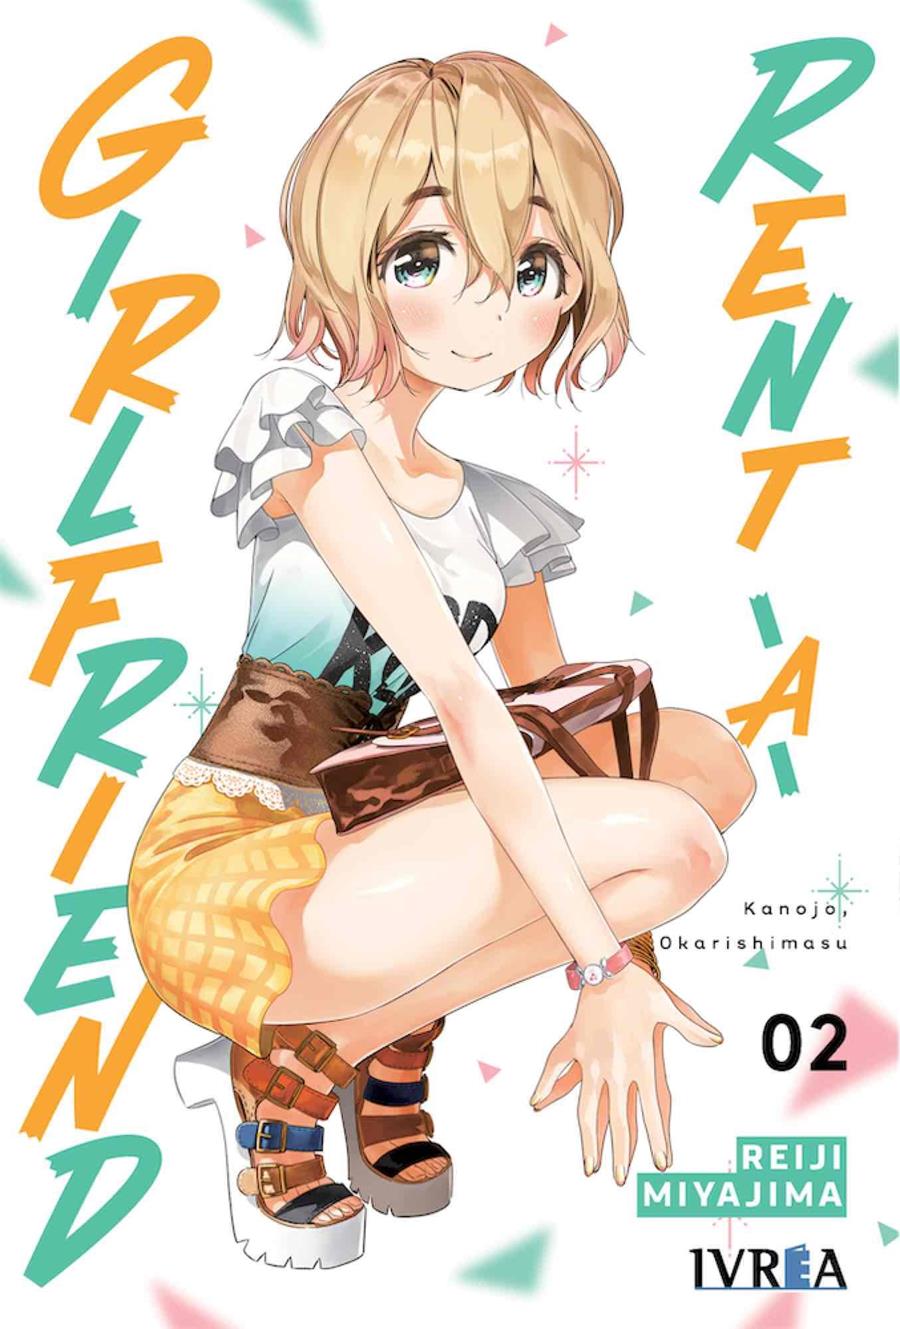 Rent-a-girlfriend 02 | N0421-IVR10 | Reiji Miyajima | Terra de Còmic - Tu tienda de cómics online especializada en cómics, manga y merchandising